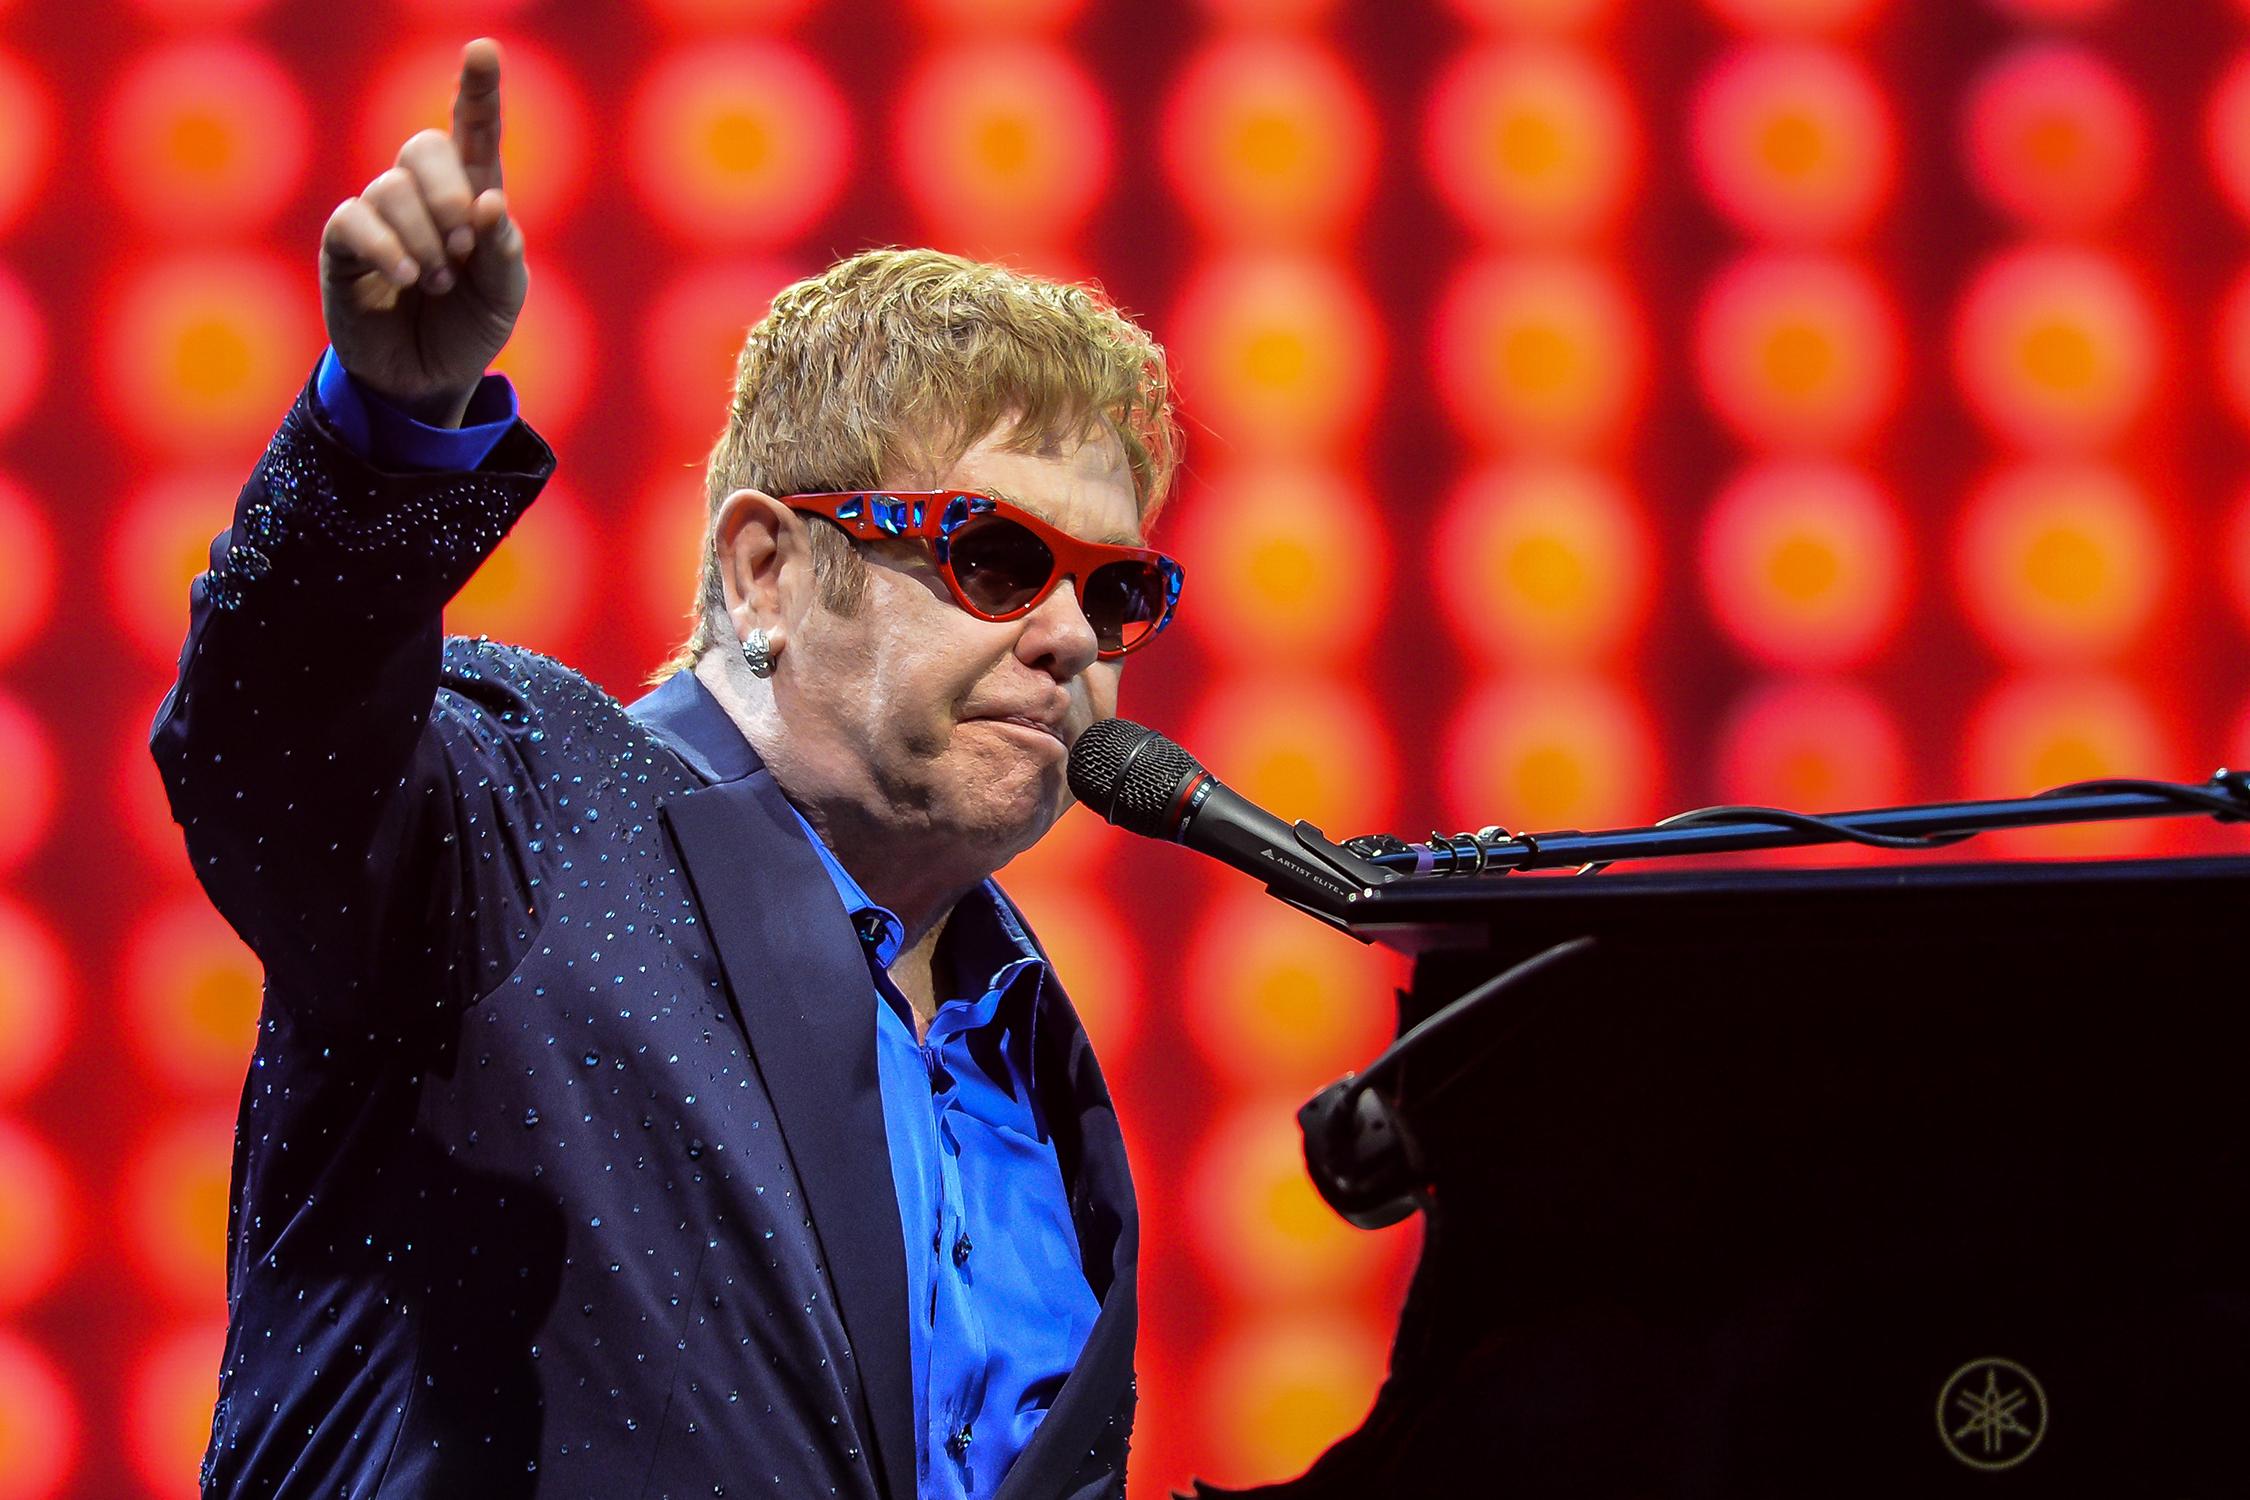 Elton John - $500 Million Net Worth, The Rocket Man